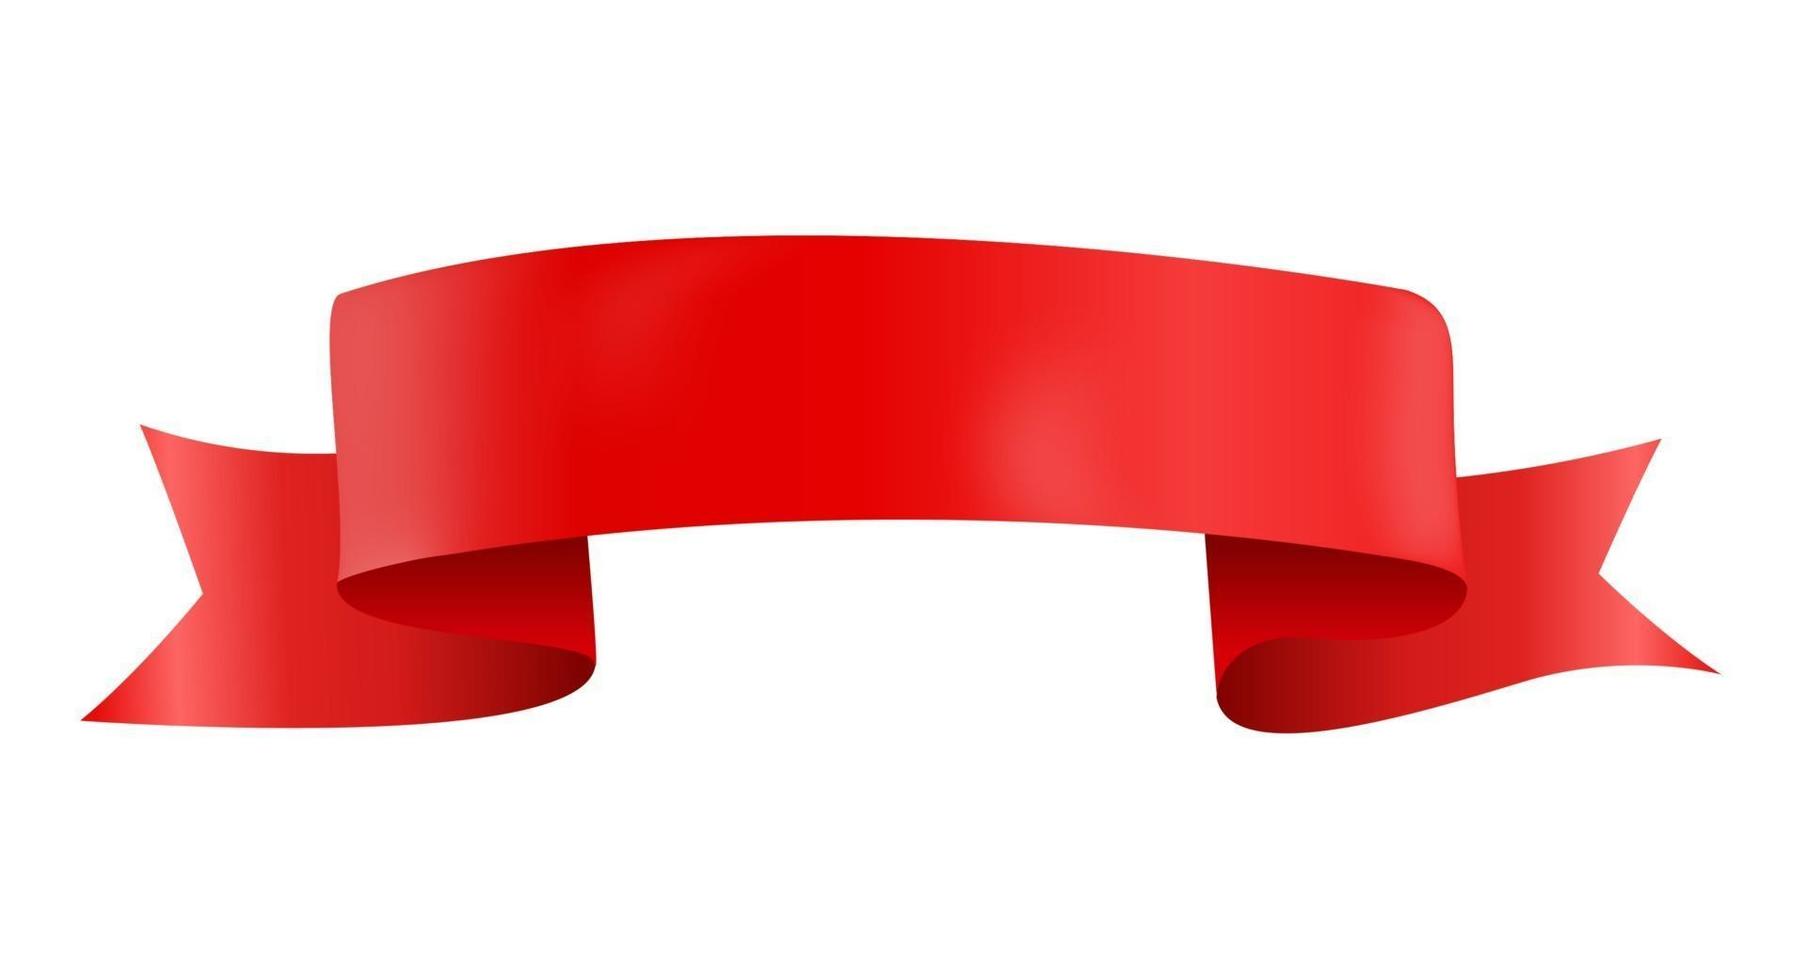 plantilla de cinta roja abstracta sobre fondo blanco. ilustración vectorial  2833336 Vector en Vecteezy